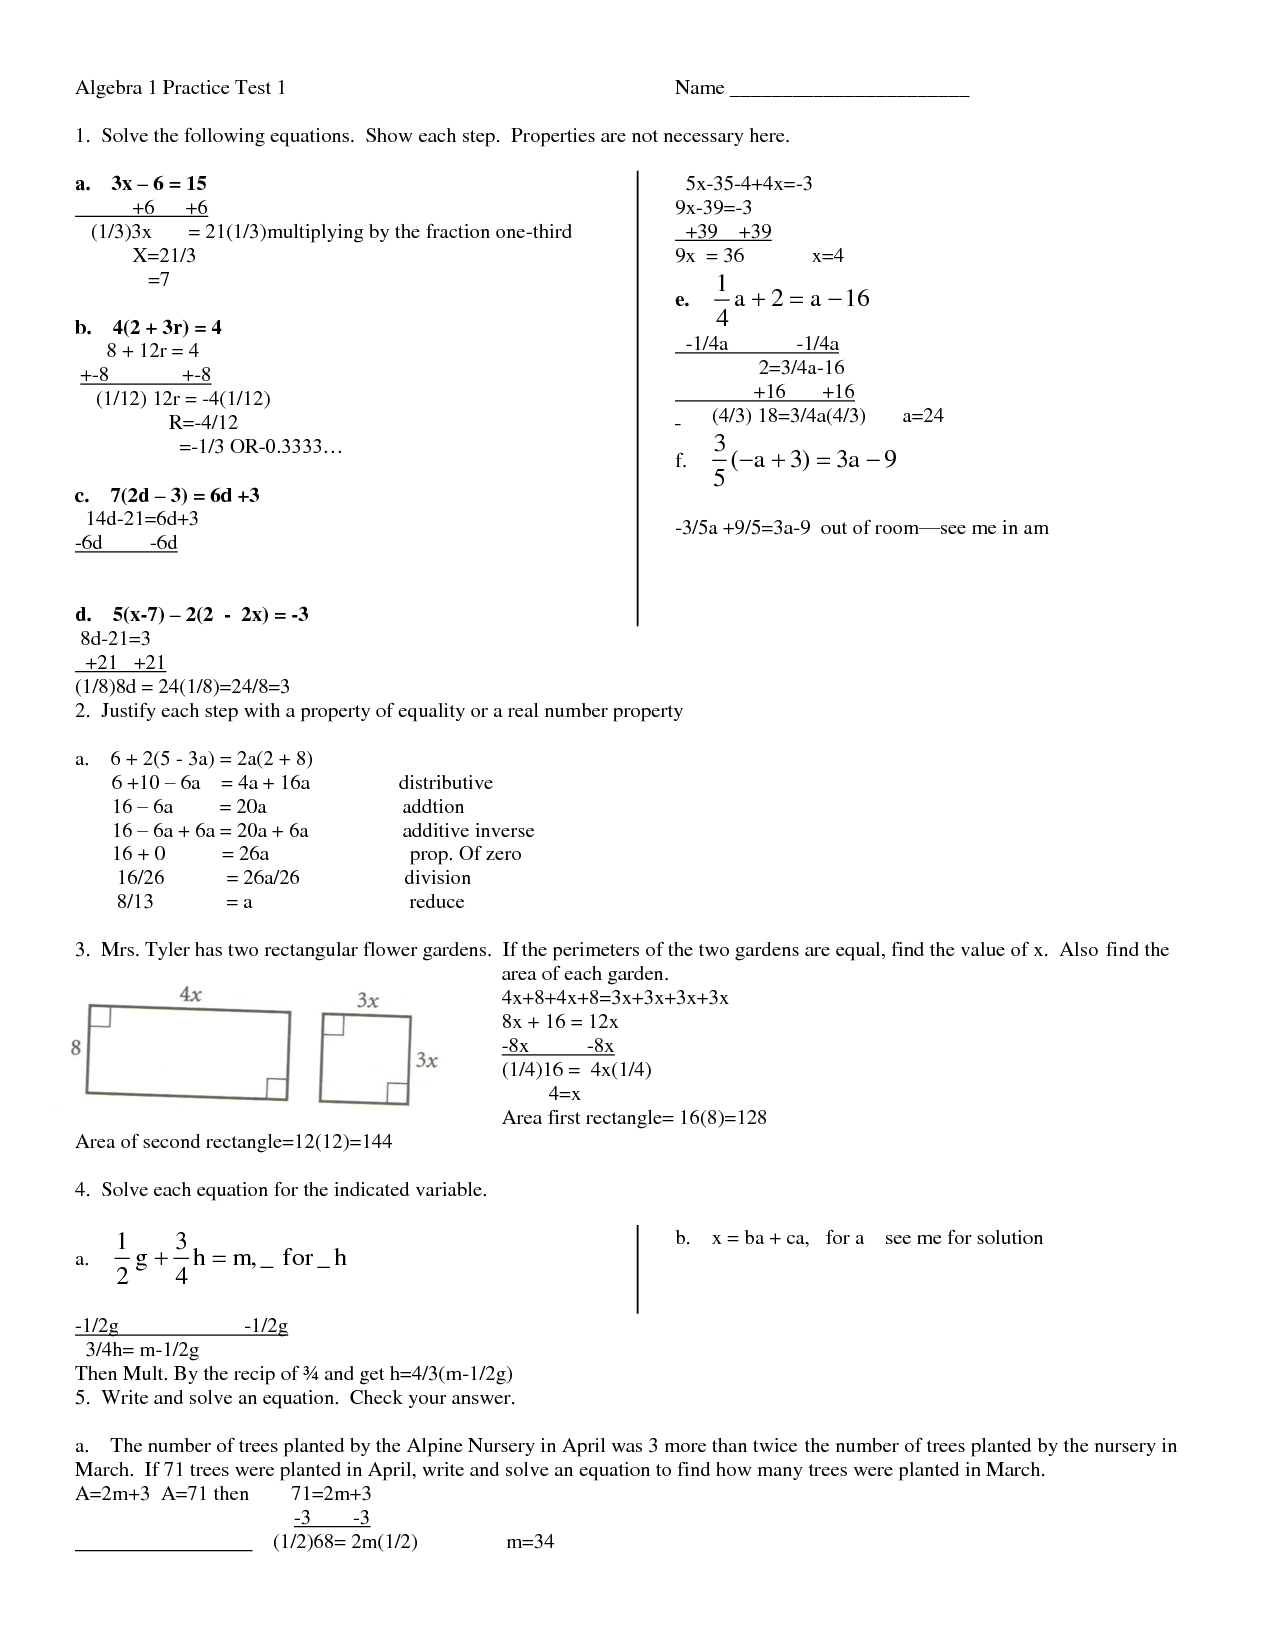 Printable Algebra 1 Practice Test Image